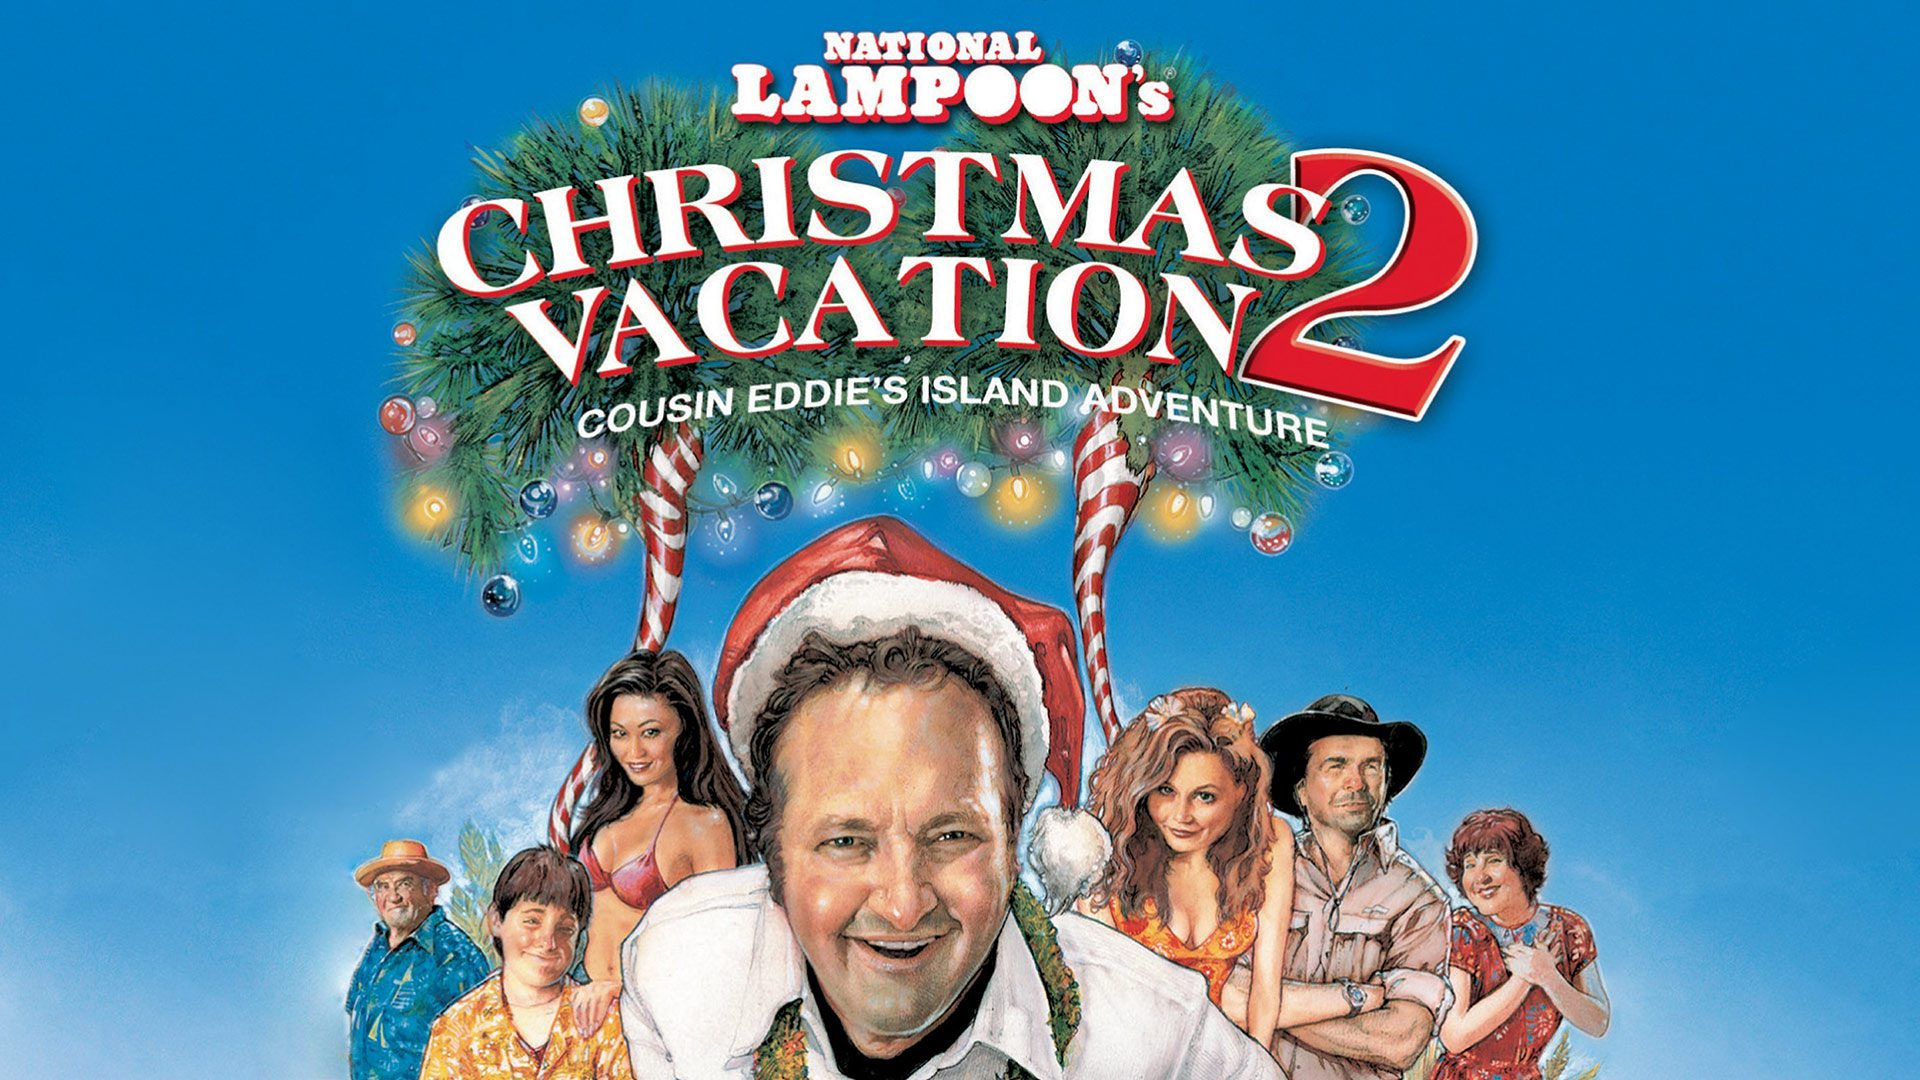 1920x1080 National Lampoon's Christmas Vacation 2: Cousin Eddie's Island Adventure (2016) | Radio Times